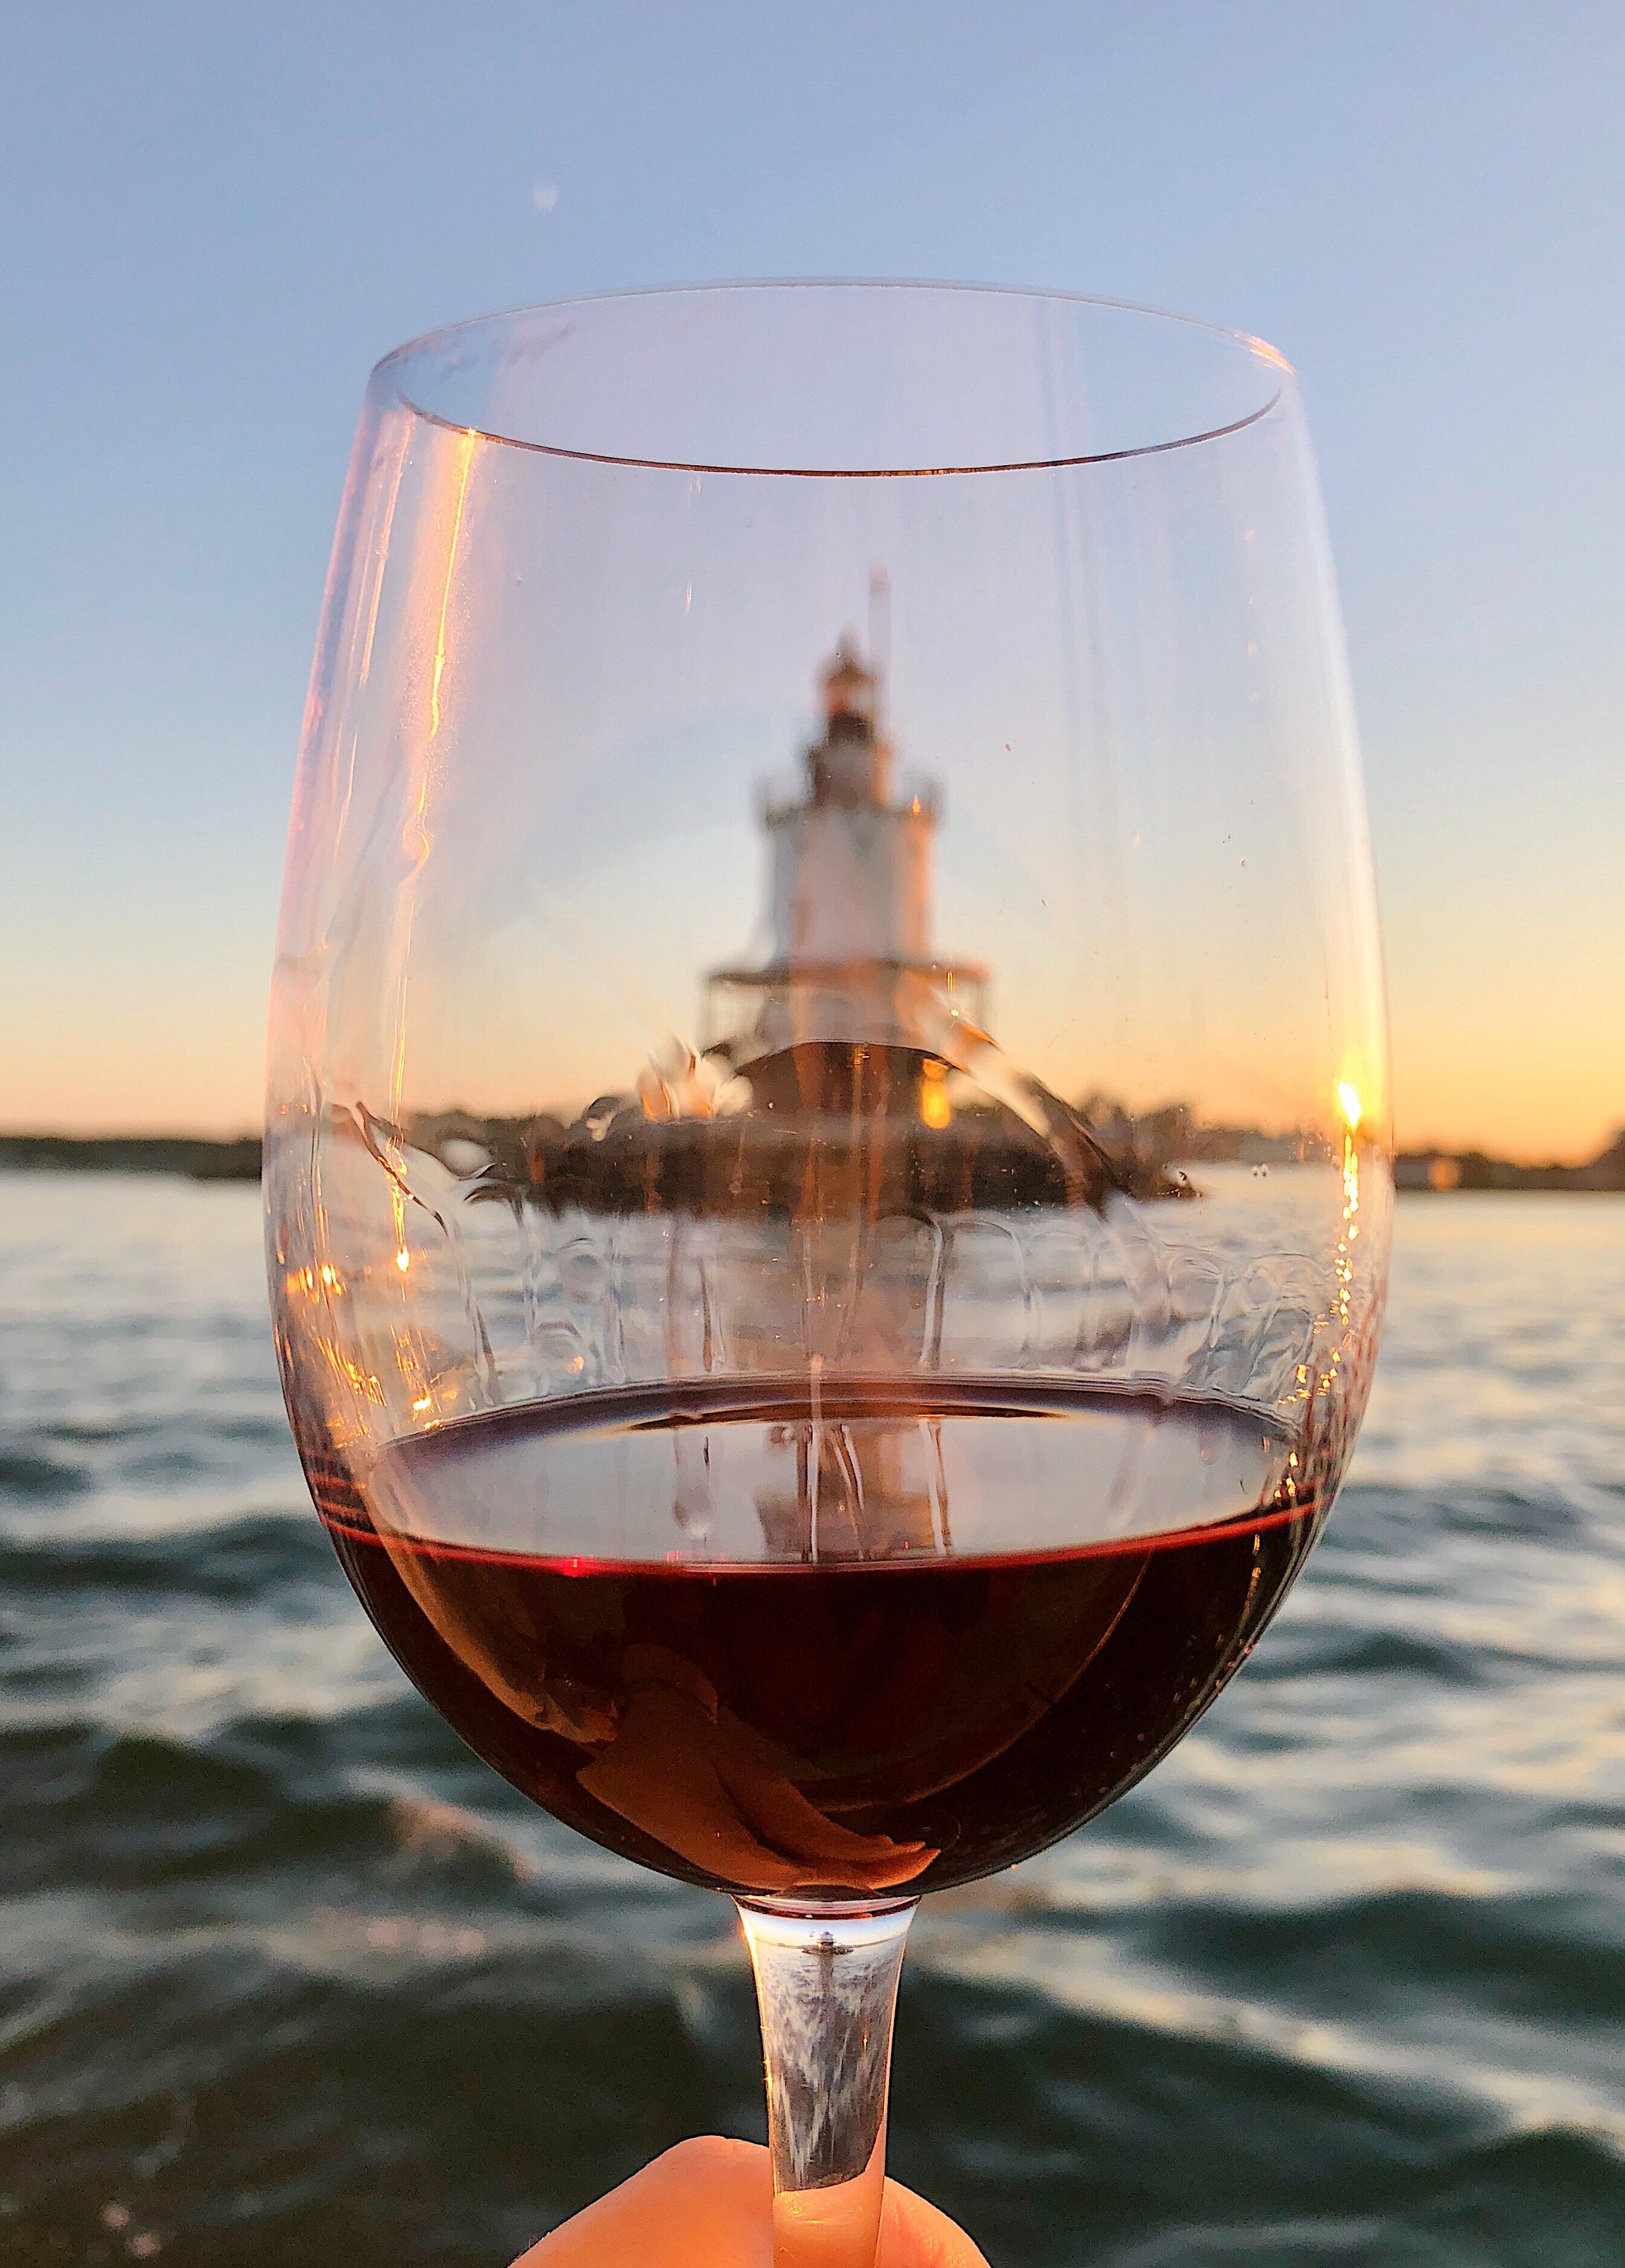 wine_wise_events_portland_maine_wine_sailwine_wise_events_portland_maine_wine_sailwine_sail_winewise_portlandmaine_lighthouse_red.jpg